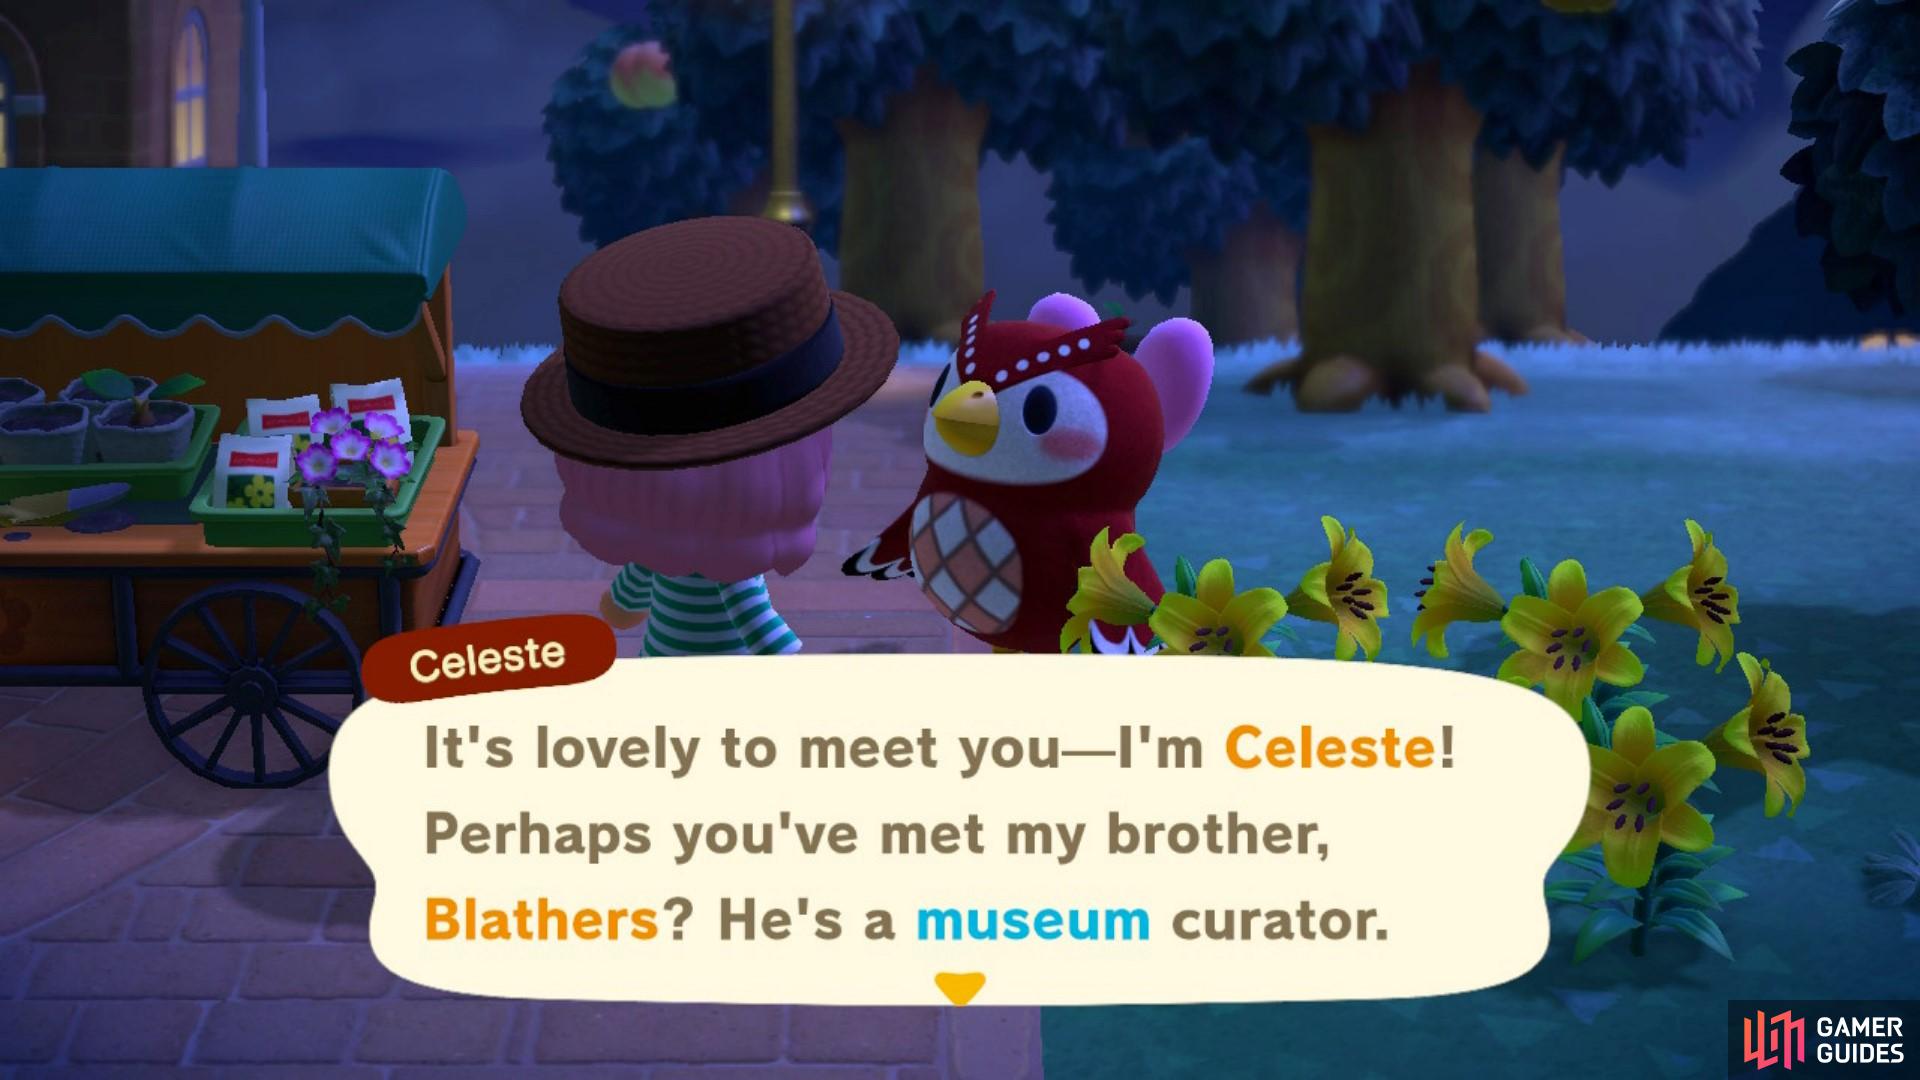 Celeste is Blathers' sister! 